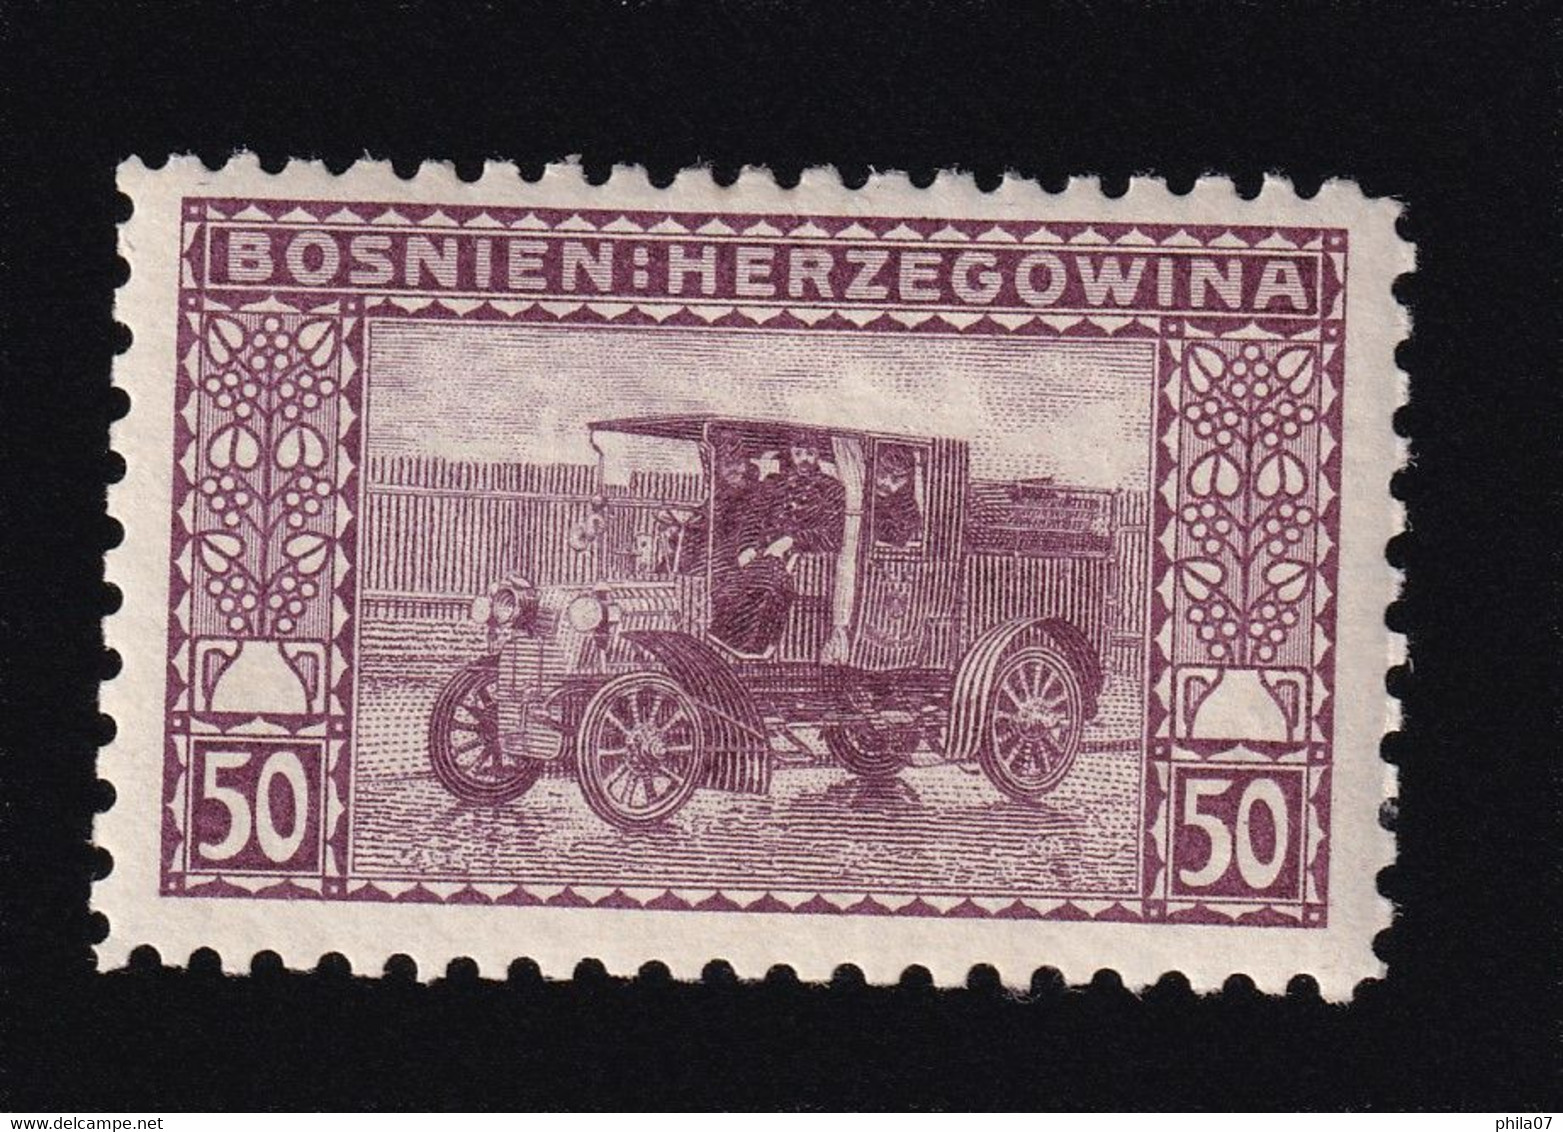 BOSNIA AND HERZEGOVINA - Landscape Stamp 50 Hellera, Perforation 9 ½, MNH - Bosnien-Herzegowina